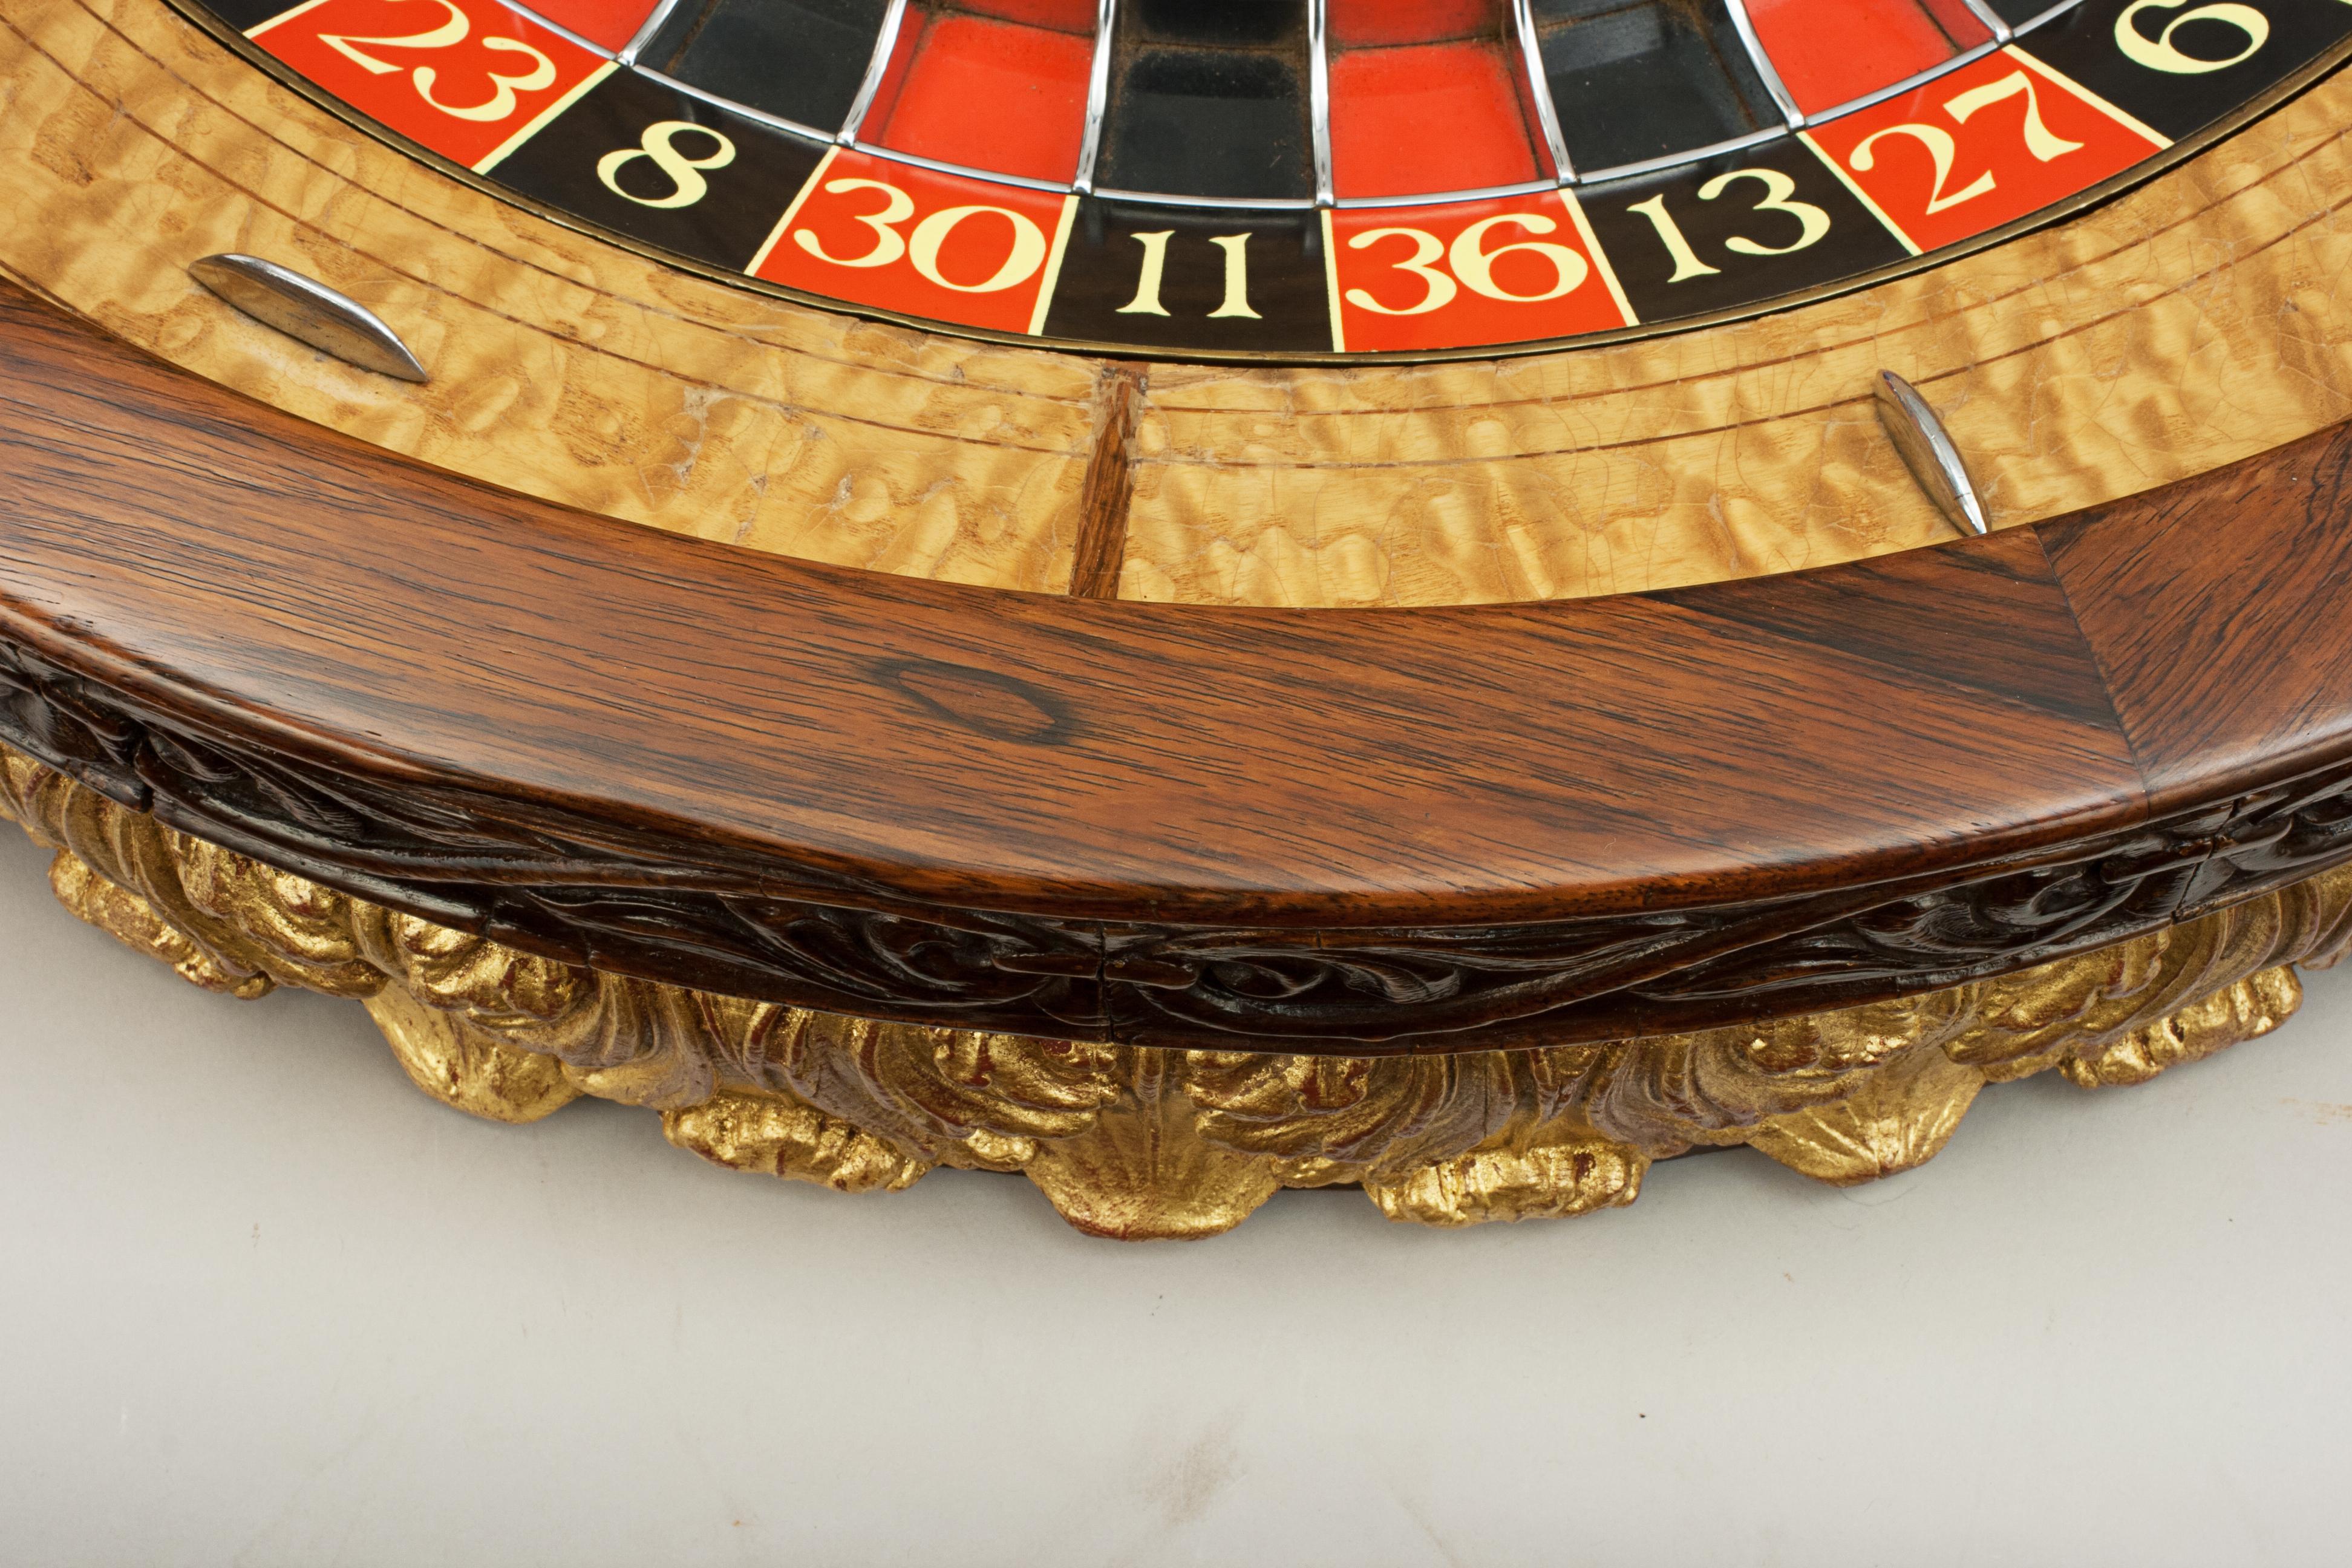 Antique Casino Roulette Wheel, George Mason Co. Denver Colorado 6